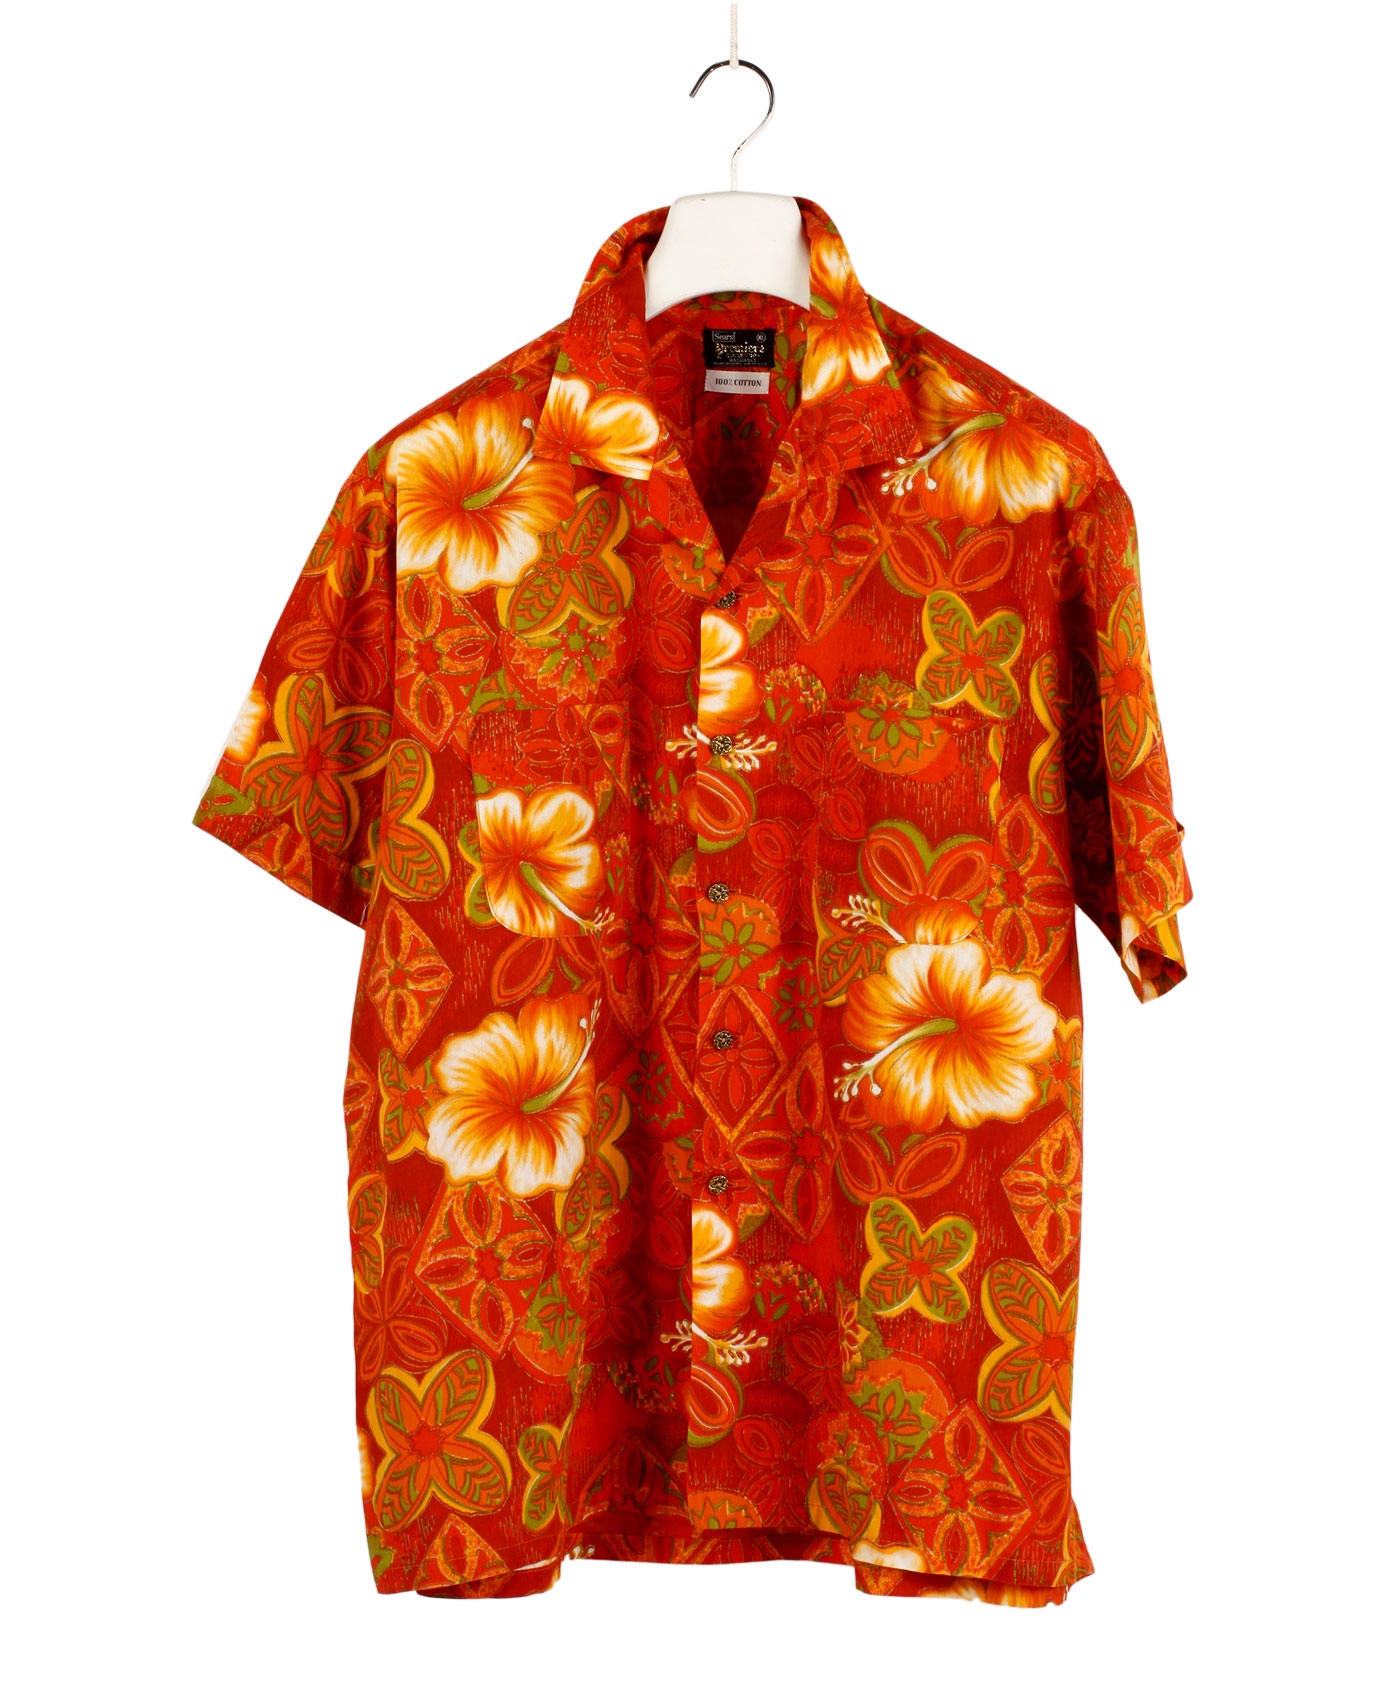 SEARS PREMIERE COLLECTION Hawaiian shirt '70s ca.